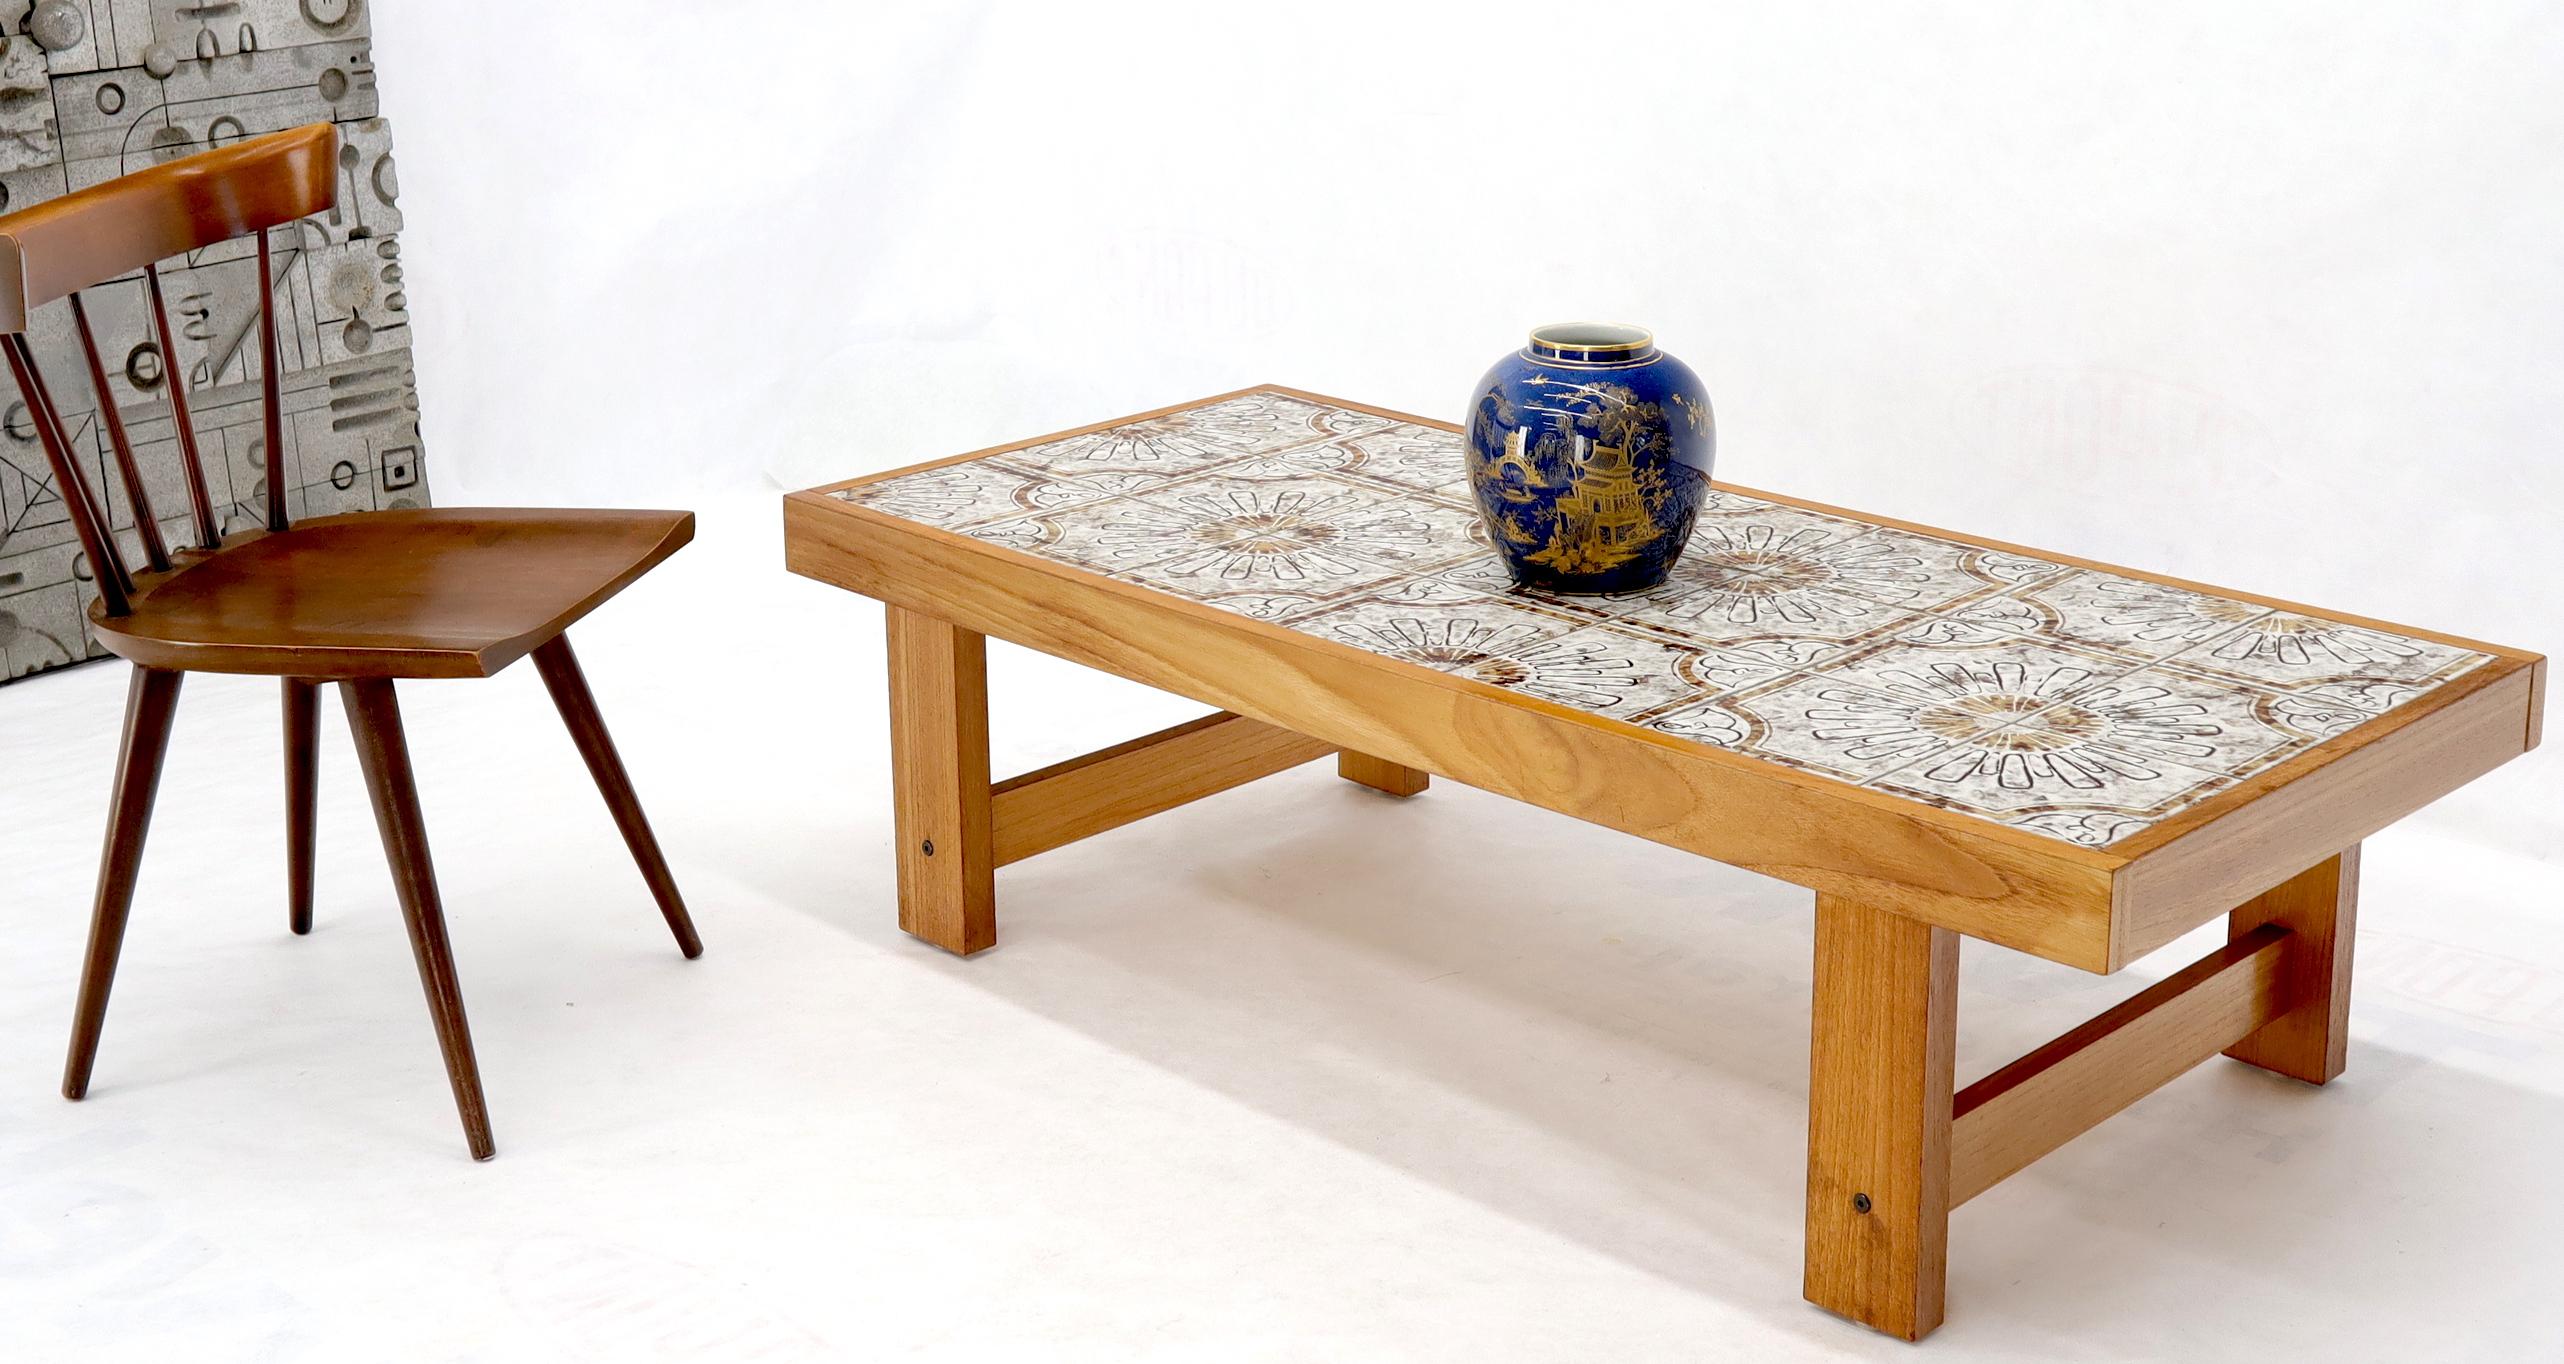 Rectangular midcentury Danish modern coffee table.